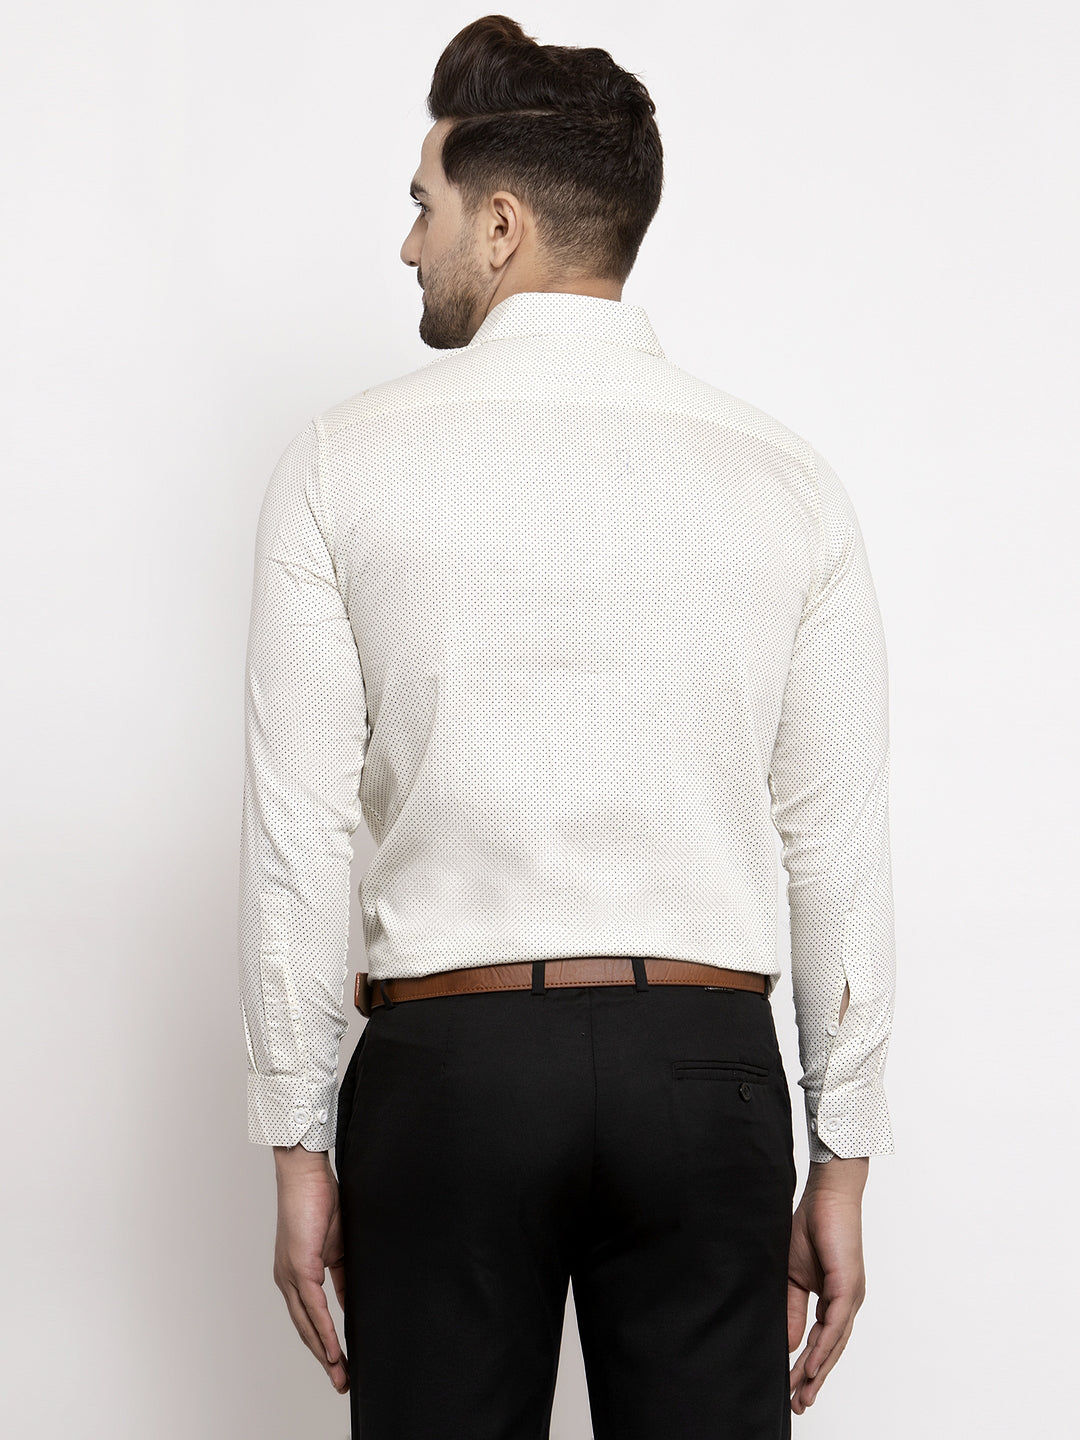 Men's Cream Cotton Polka Dots Formal Shirts ( SF 736Cream ) - Jainish